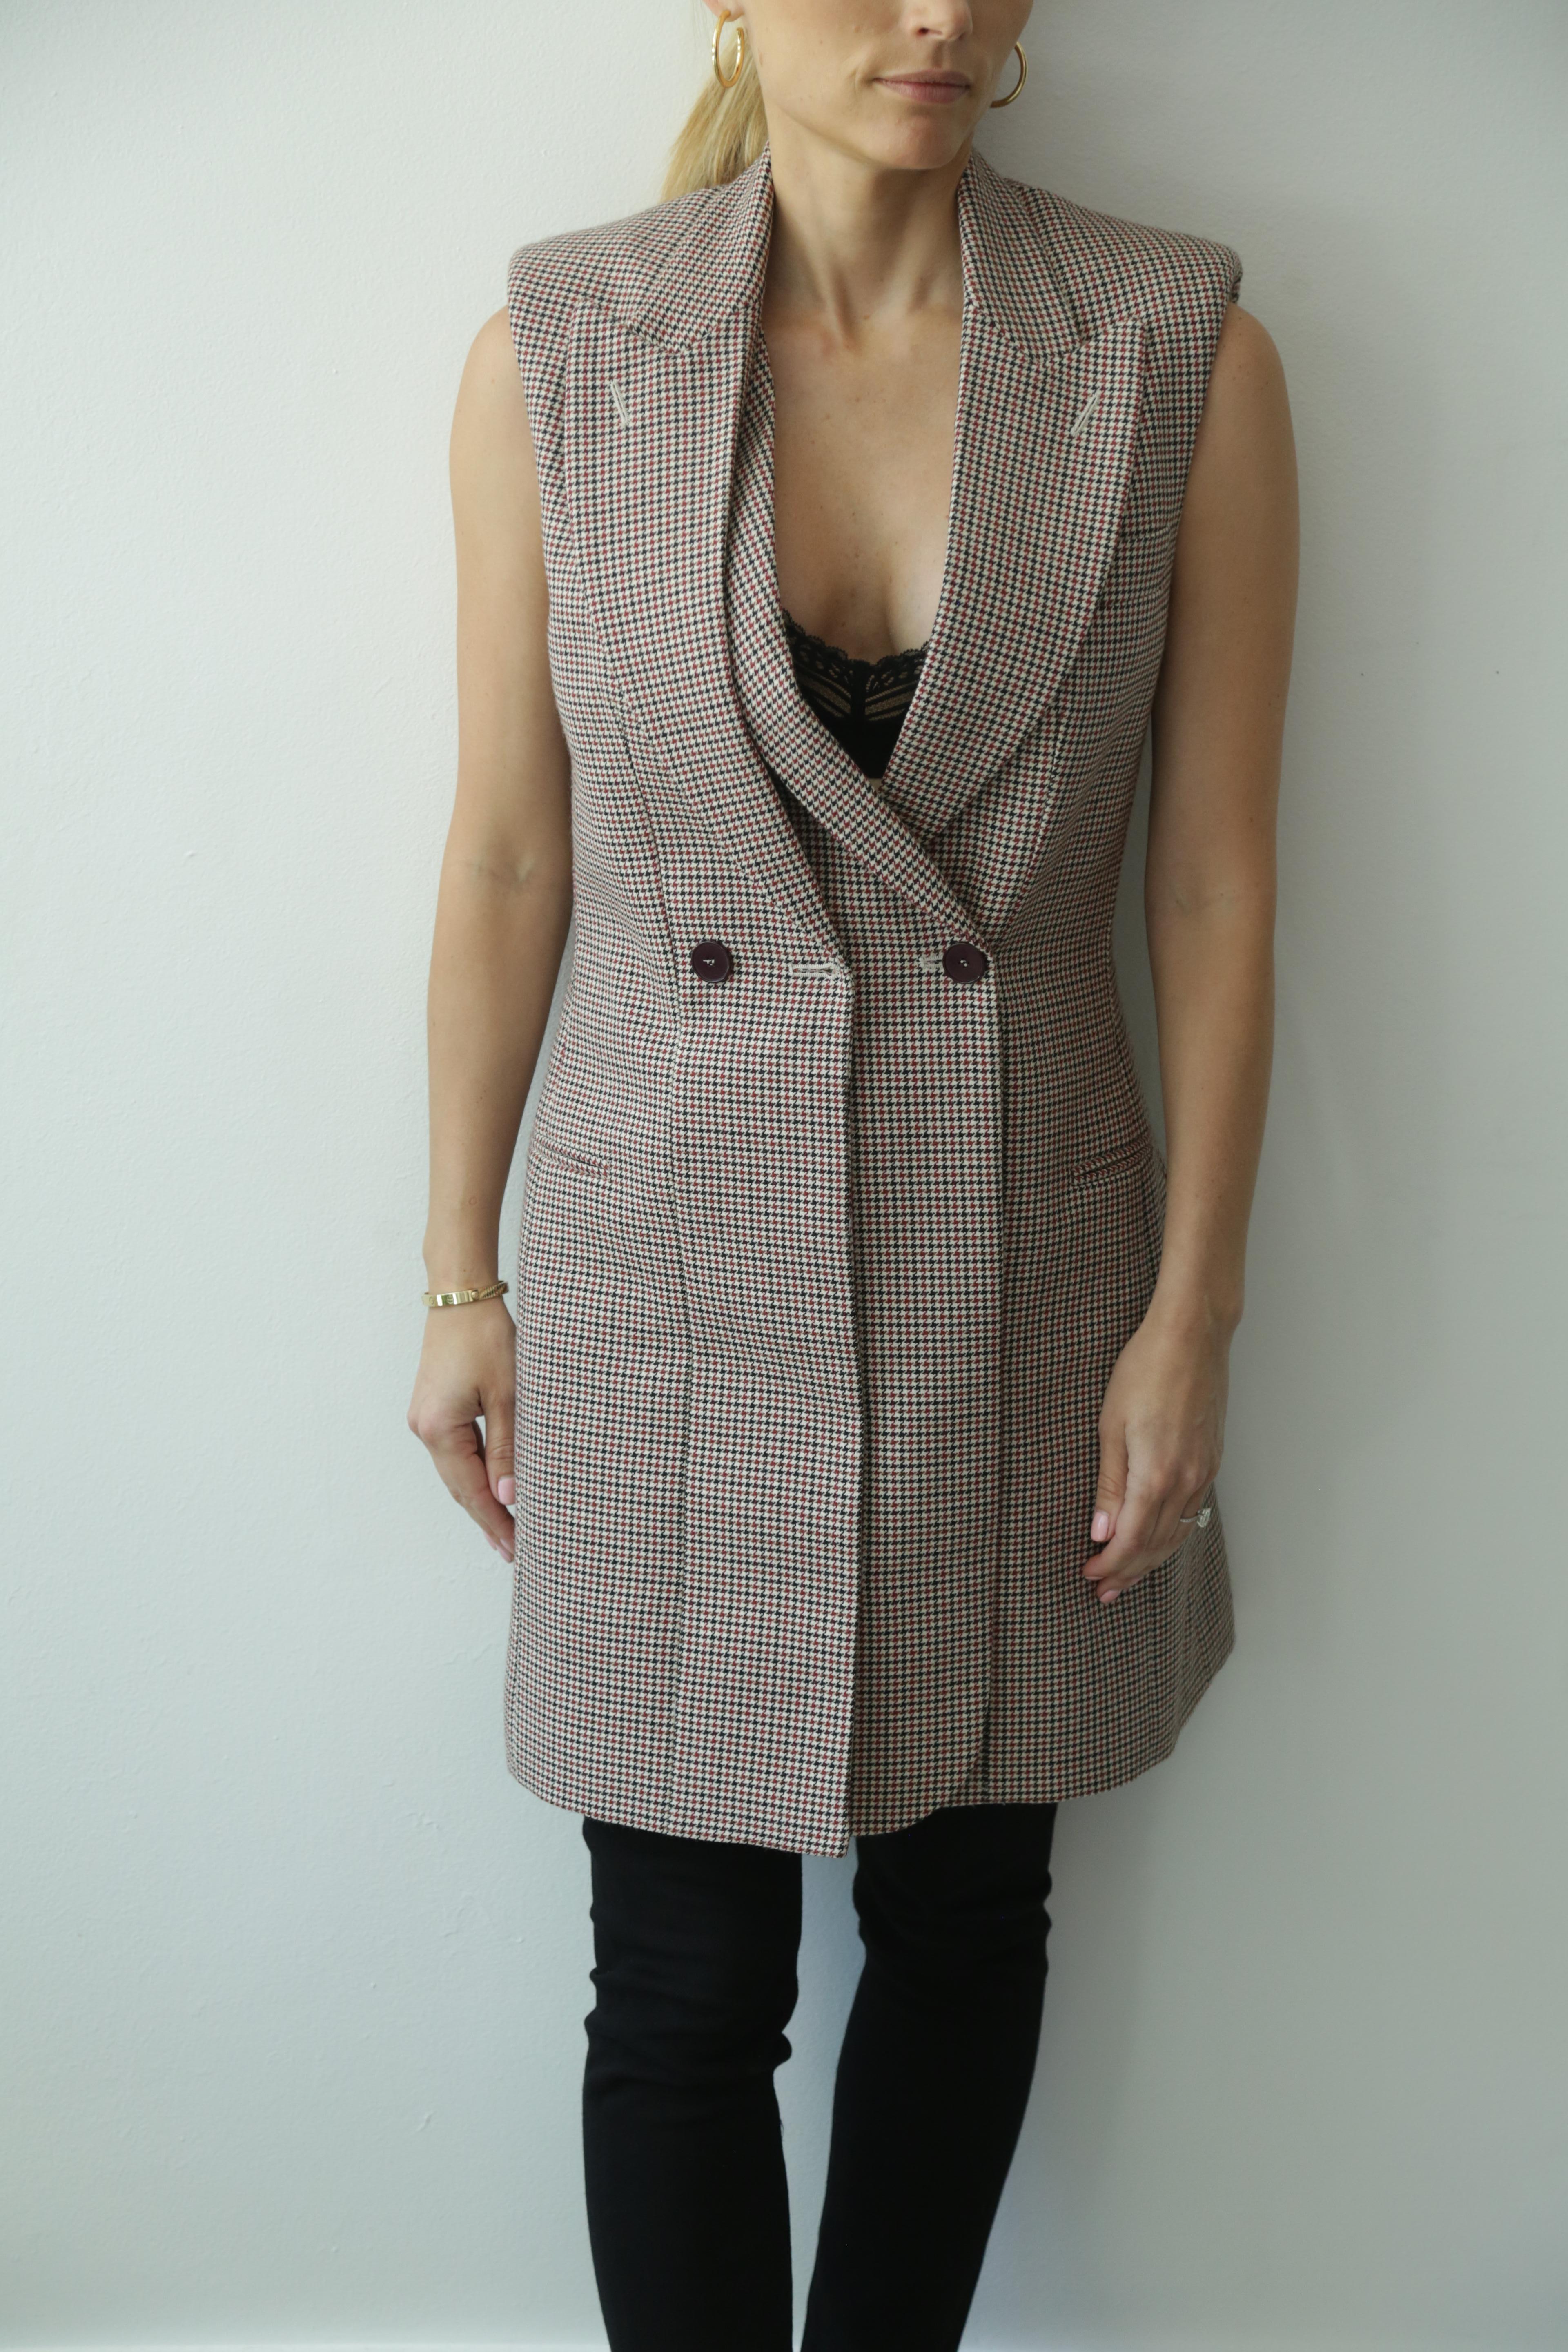 Stella McCartney Tweed Suit Dress  5